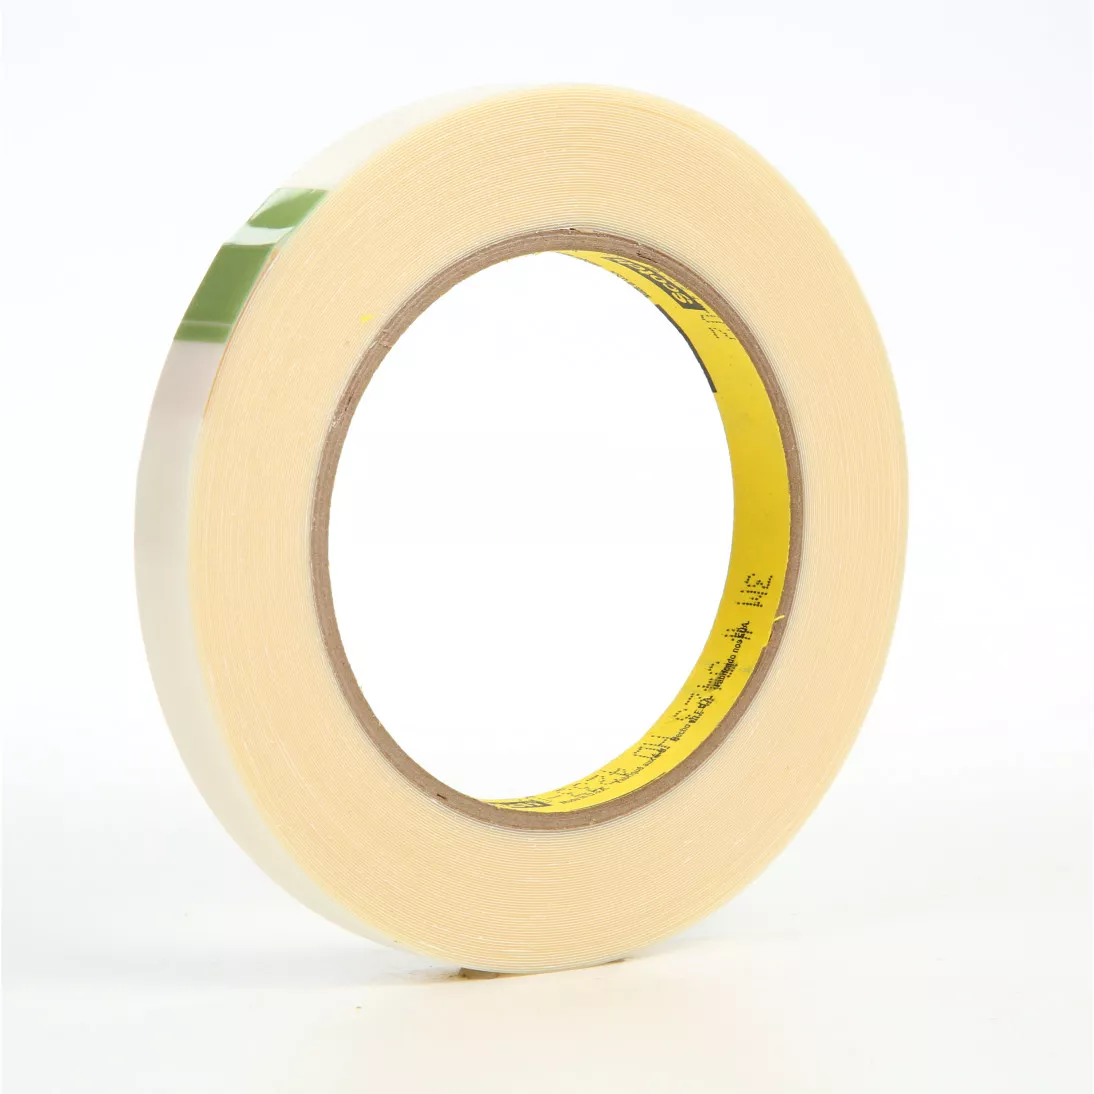 3M™ UHMW Film Tape 5423, Transparent, 1/2 in x 18 yd, 12 mil, 18 rolls
per case